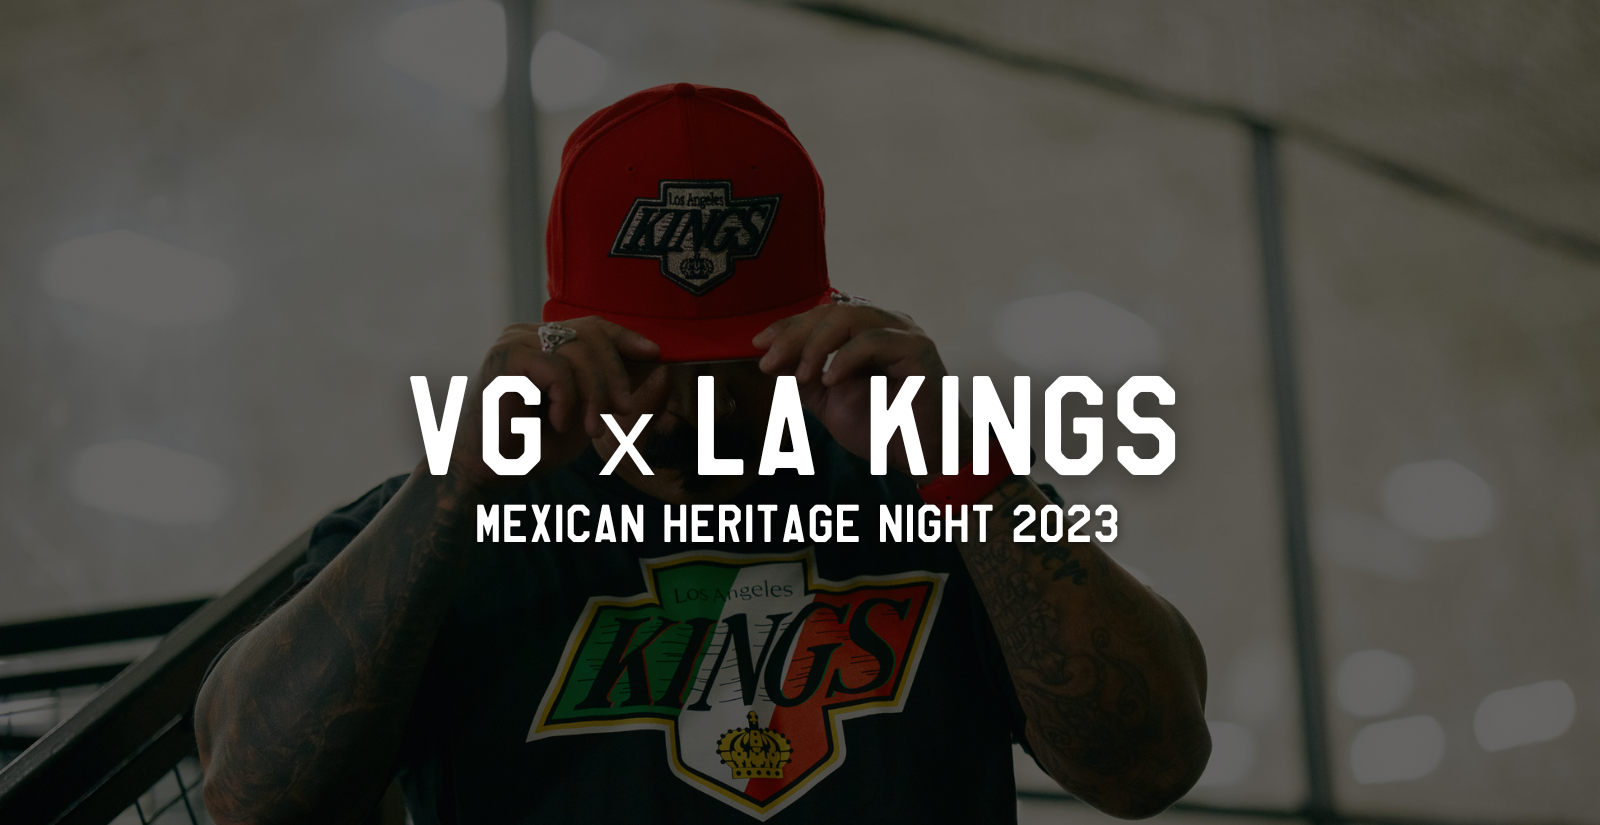 LA Kings - LA Kings added a new photo.